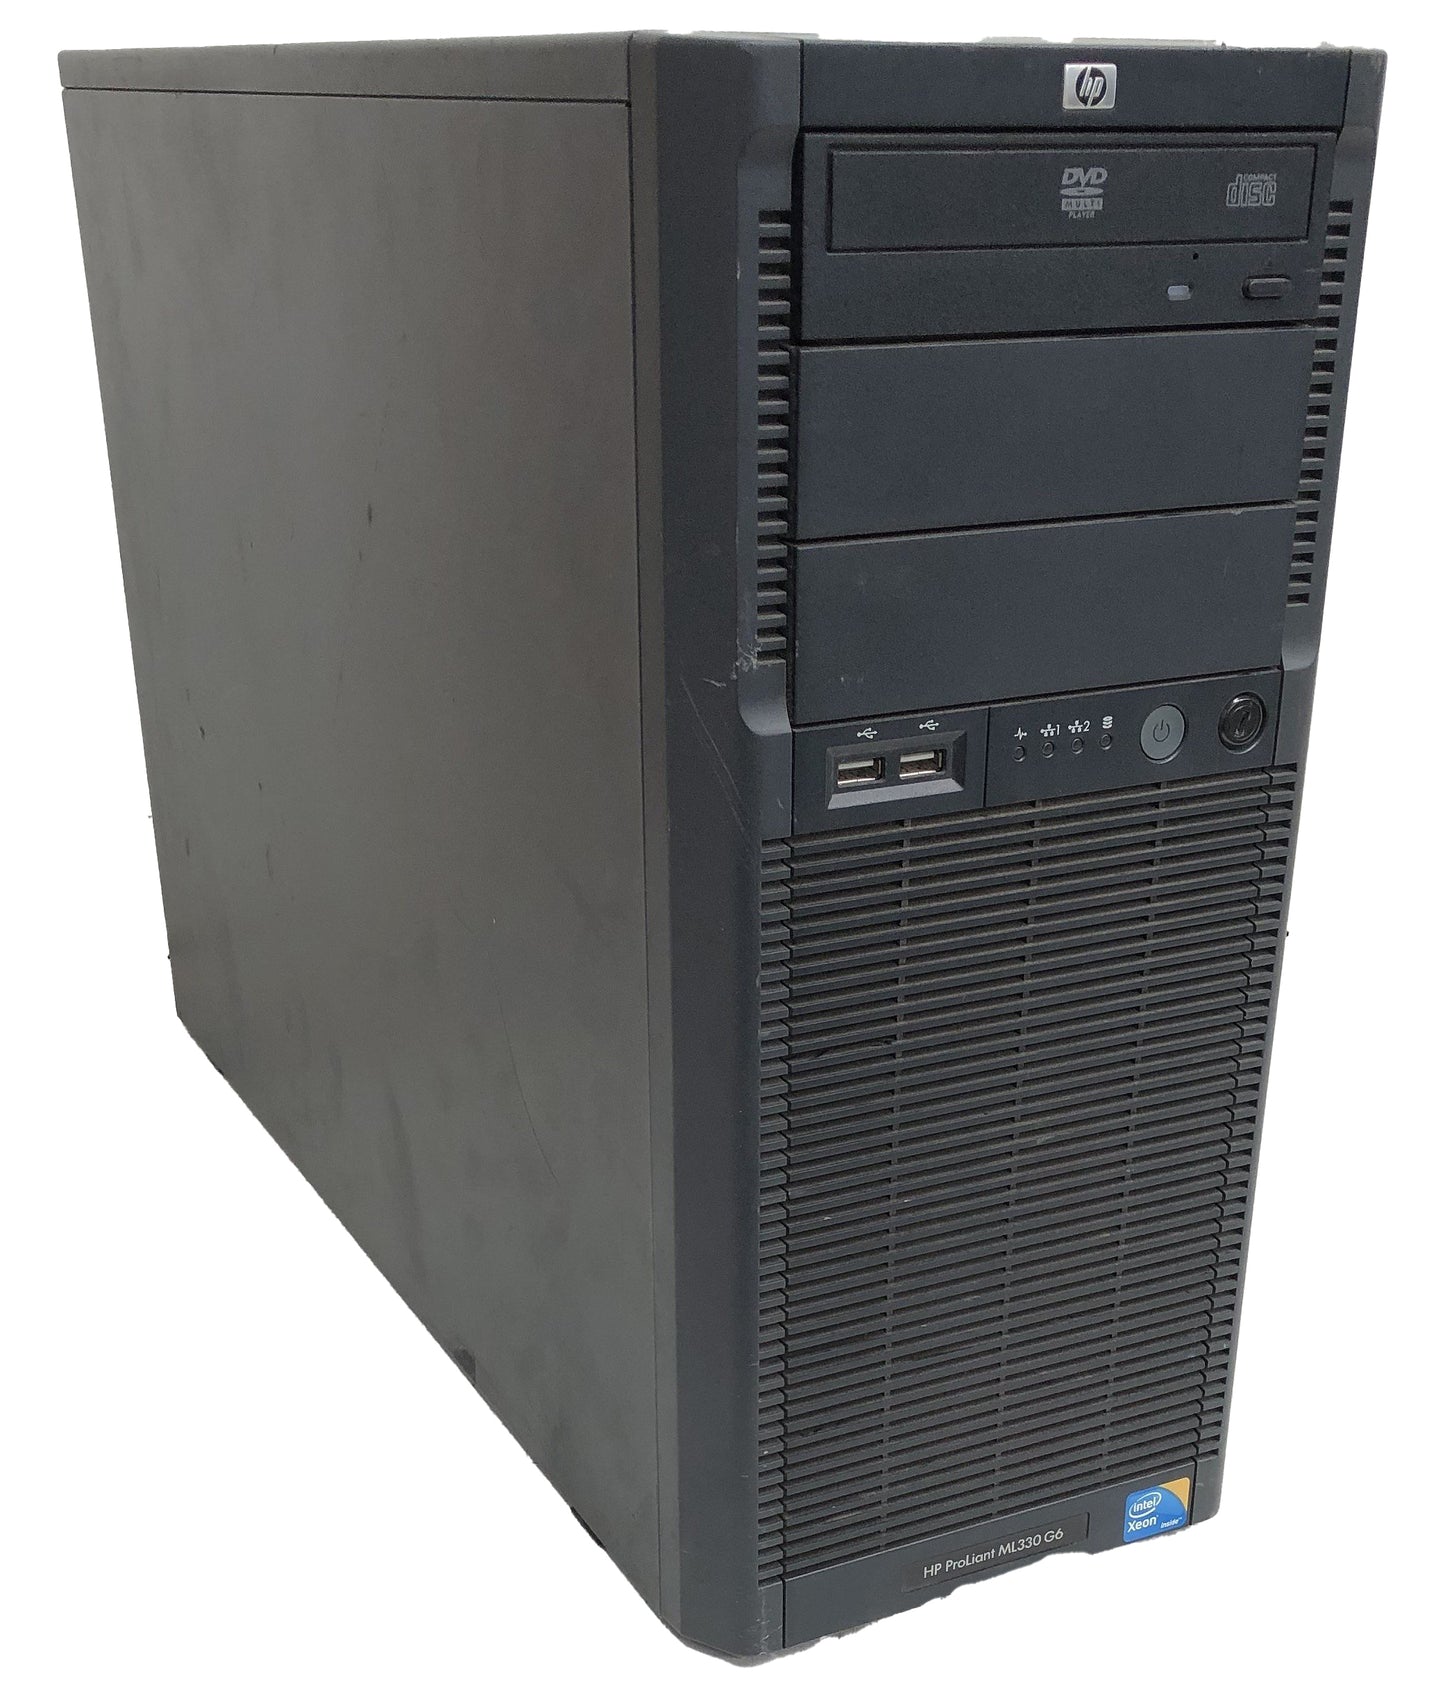 HP Proliant ML330 G6 Server Xeon E5620 2.4GHZ 1P / 8GB RAM / NOAIRBAF